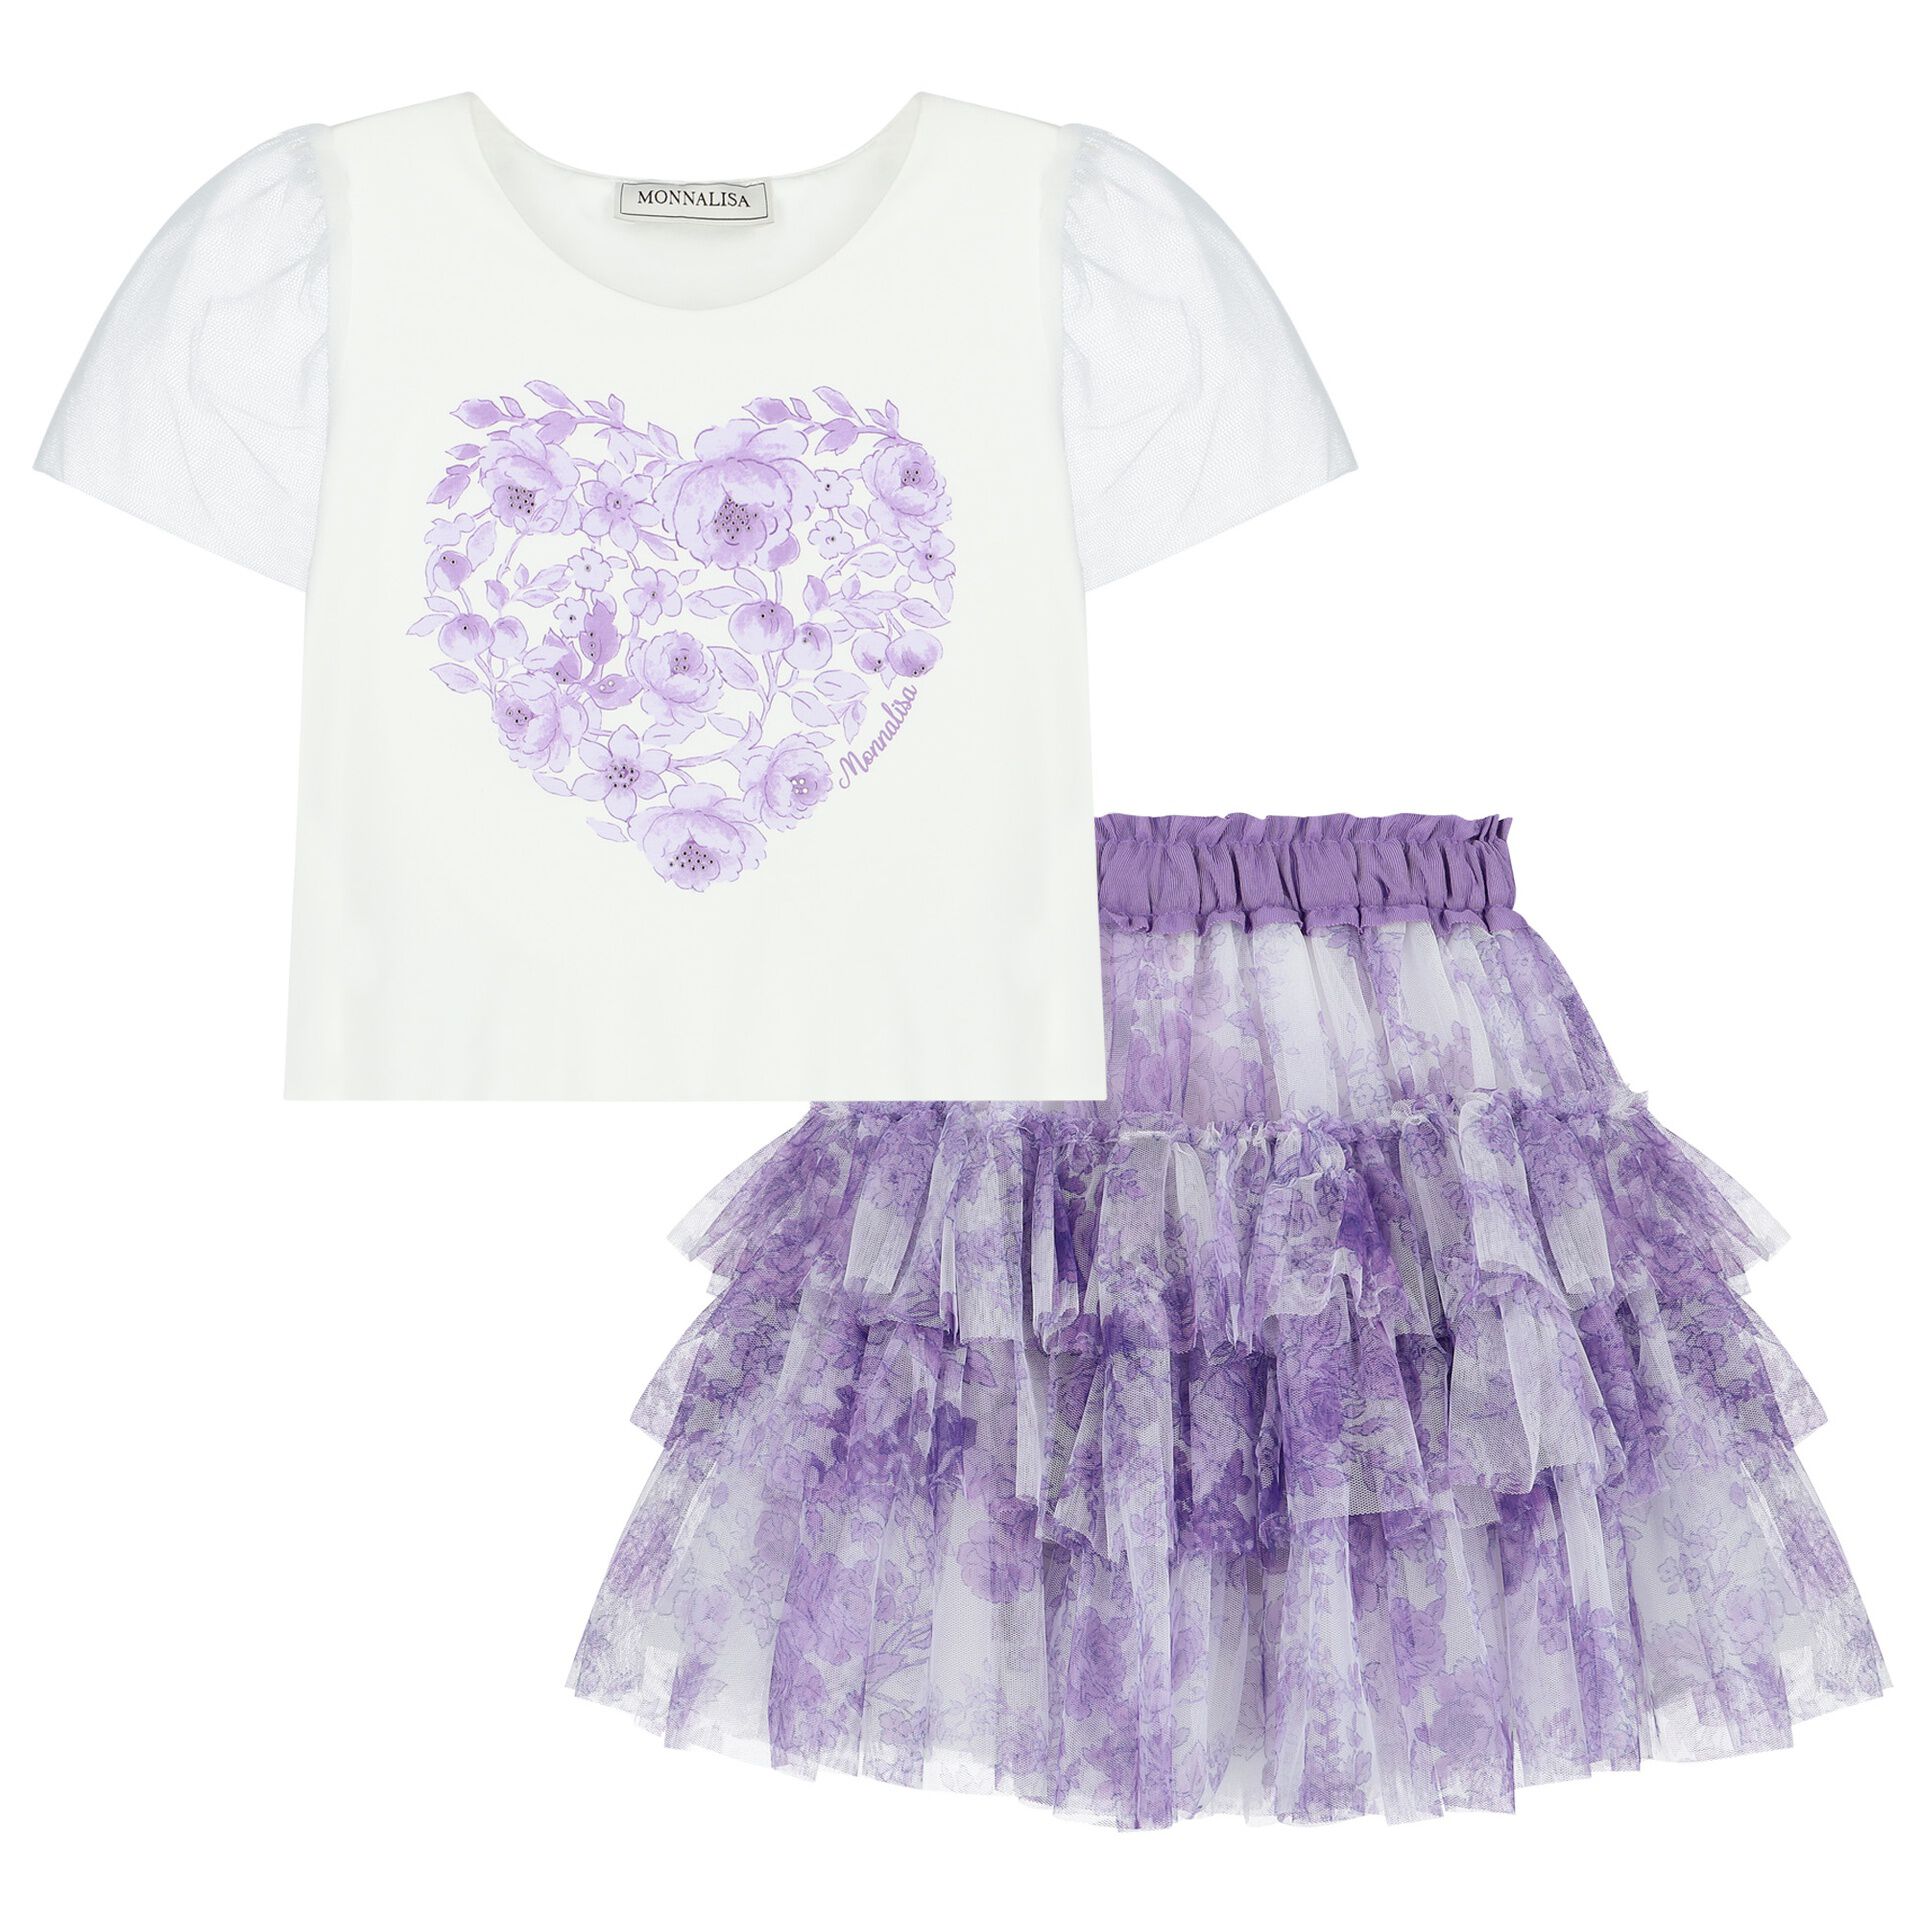 Monnalisa x Disney cotton skirt - Purple